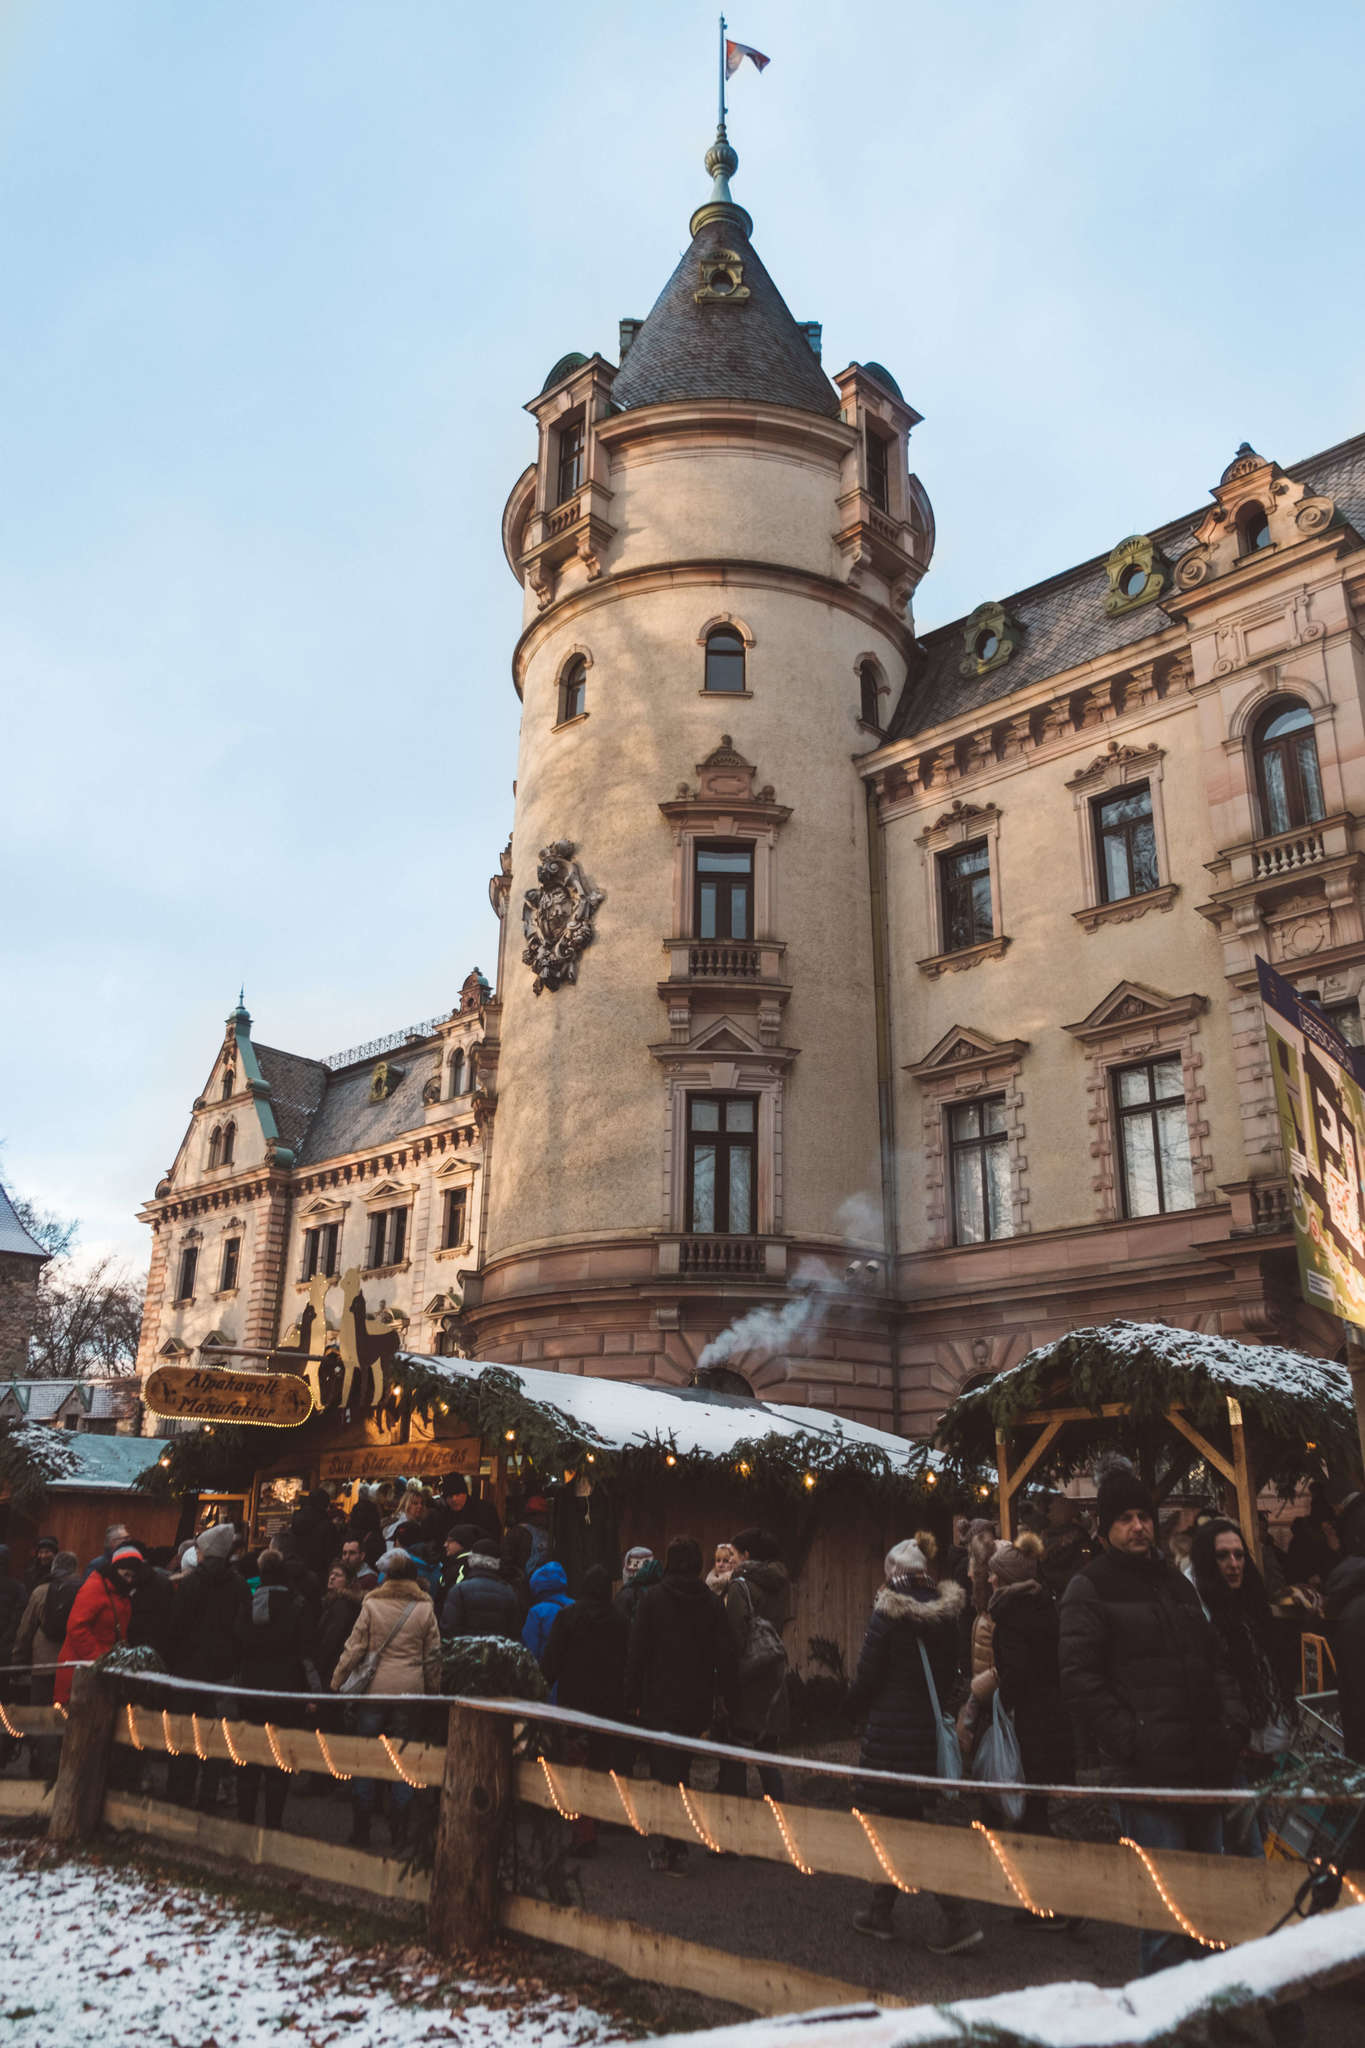 Christmas Market castle in Regensburg, Germany